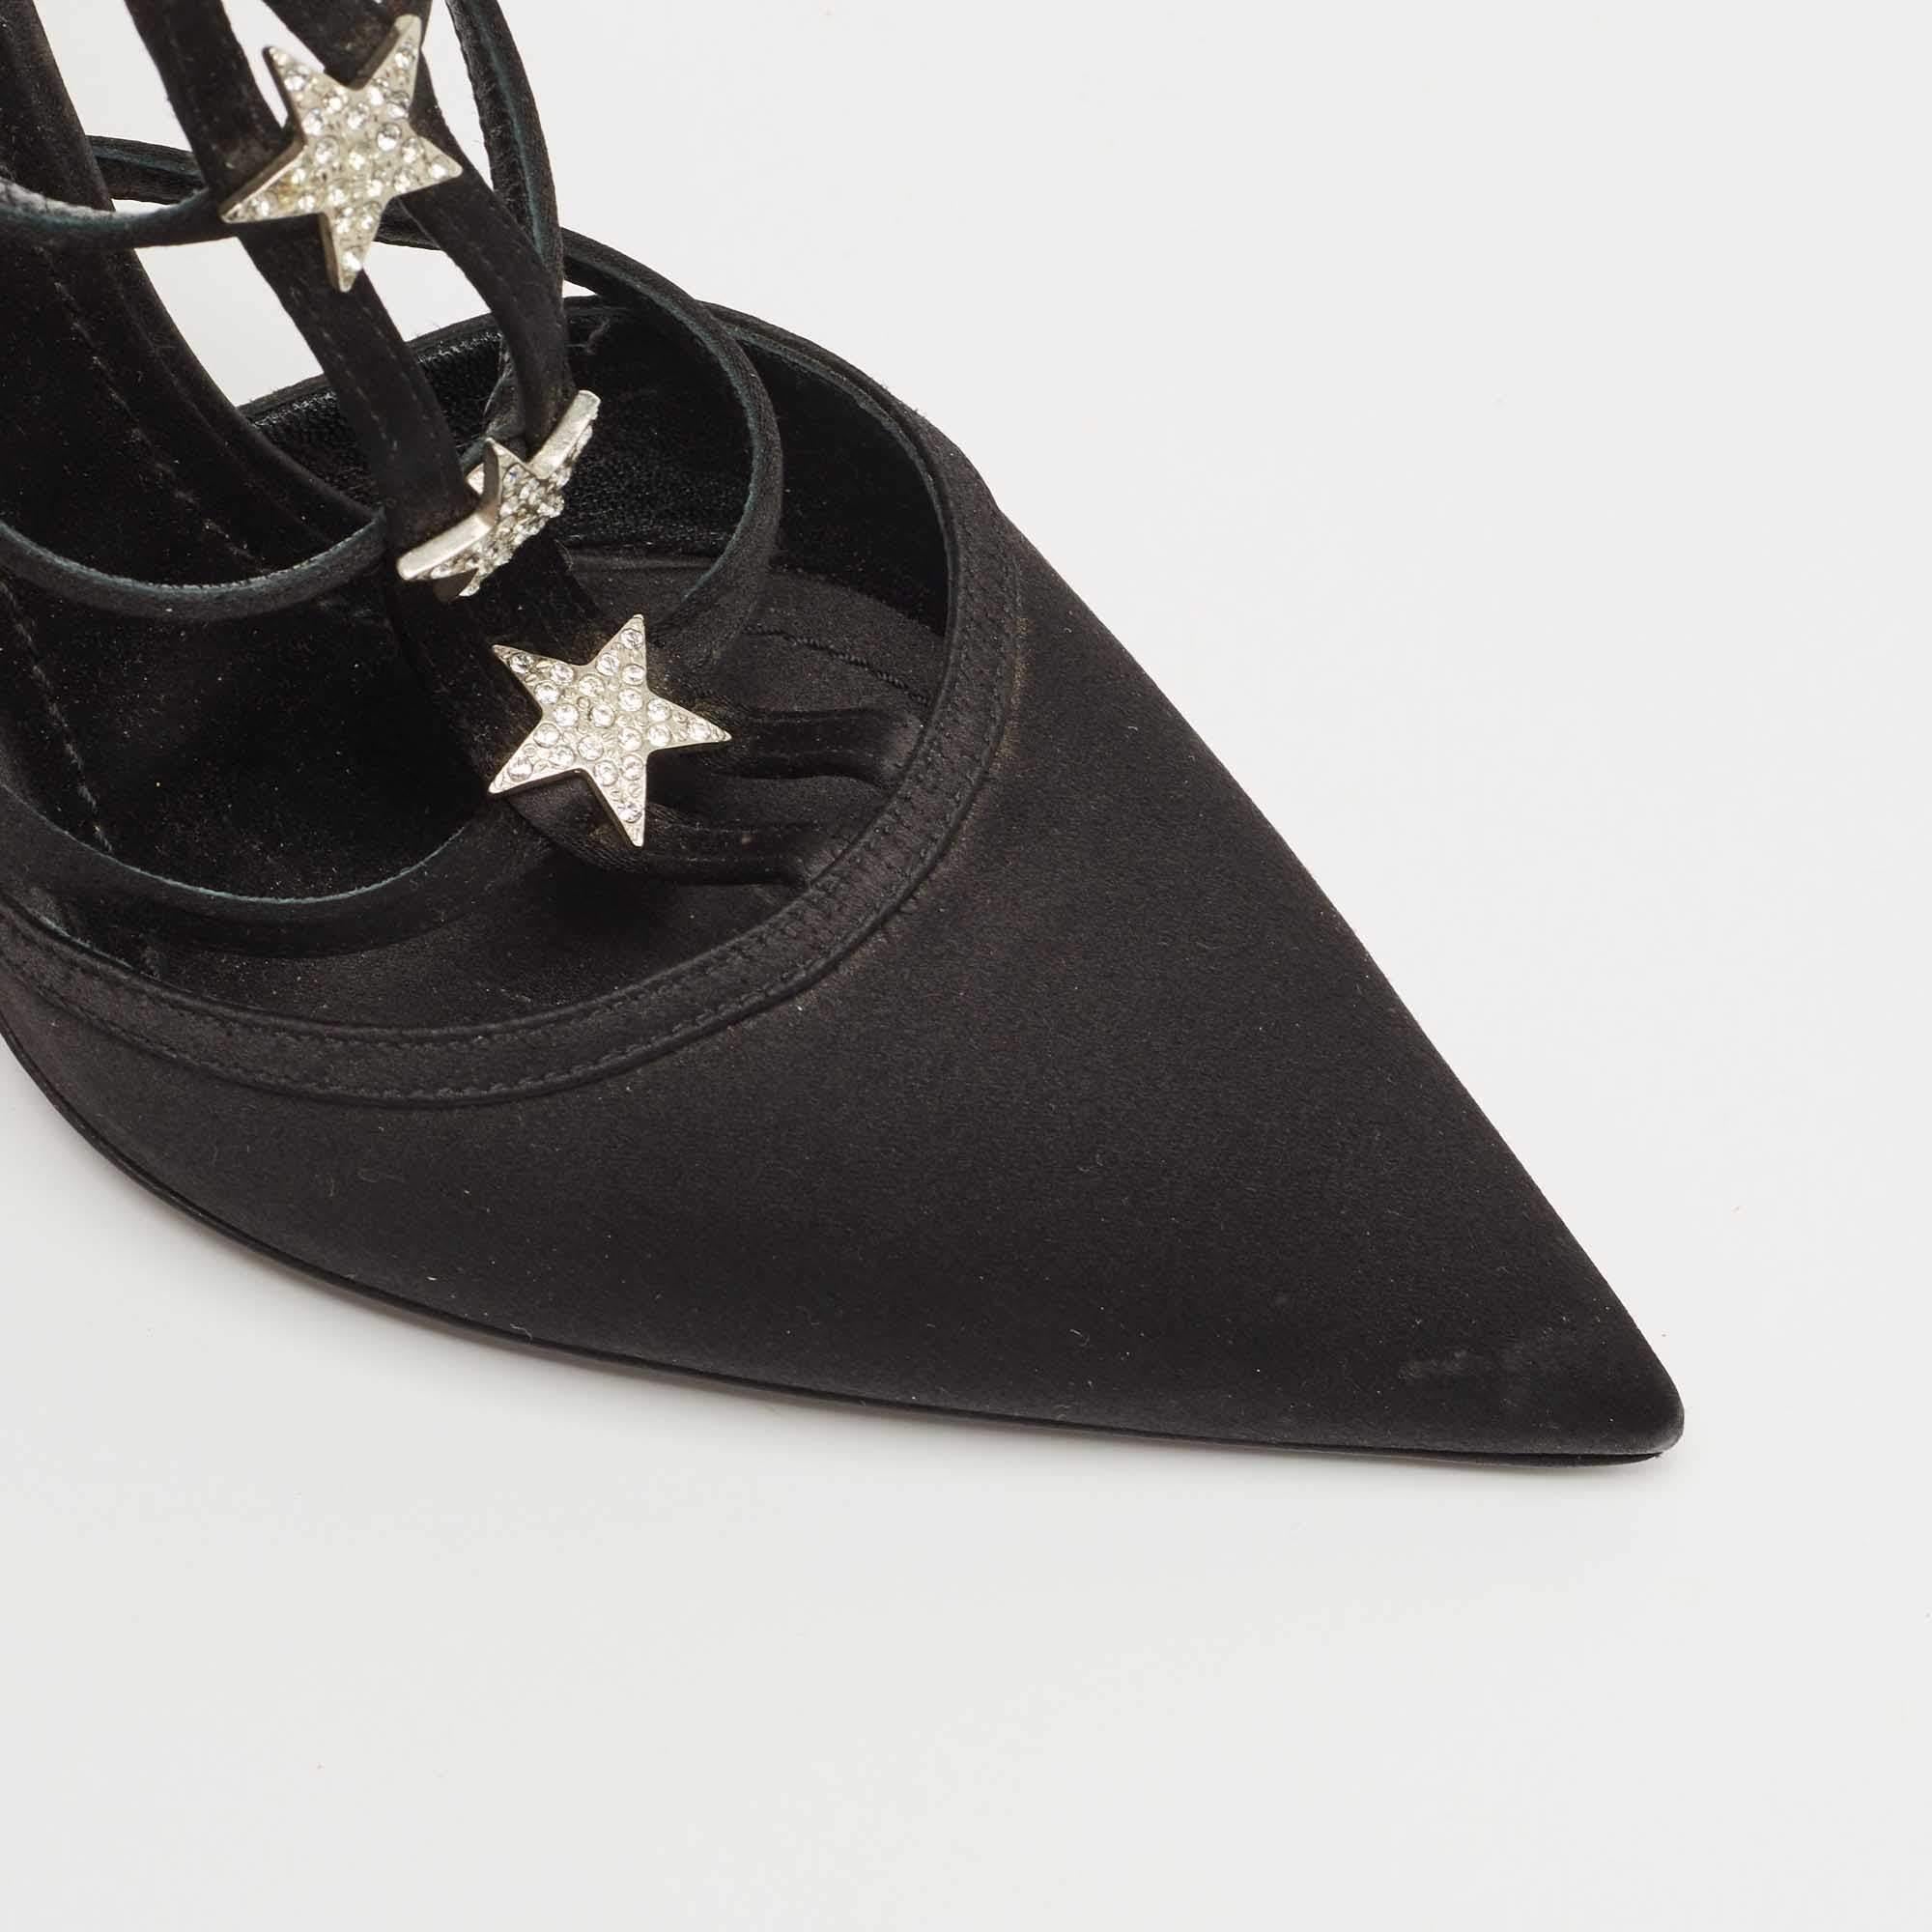 Dior Black Satin Crystal Details Strappy Pumps Size 40 4